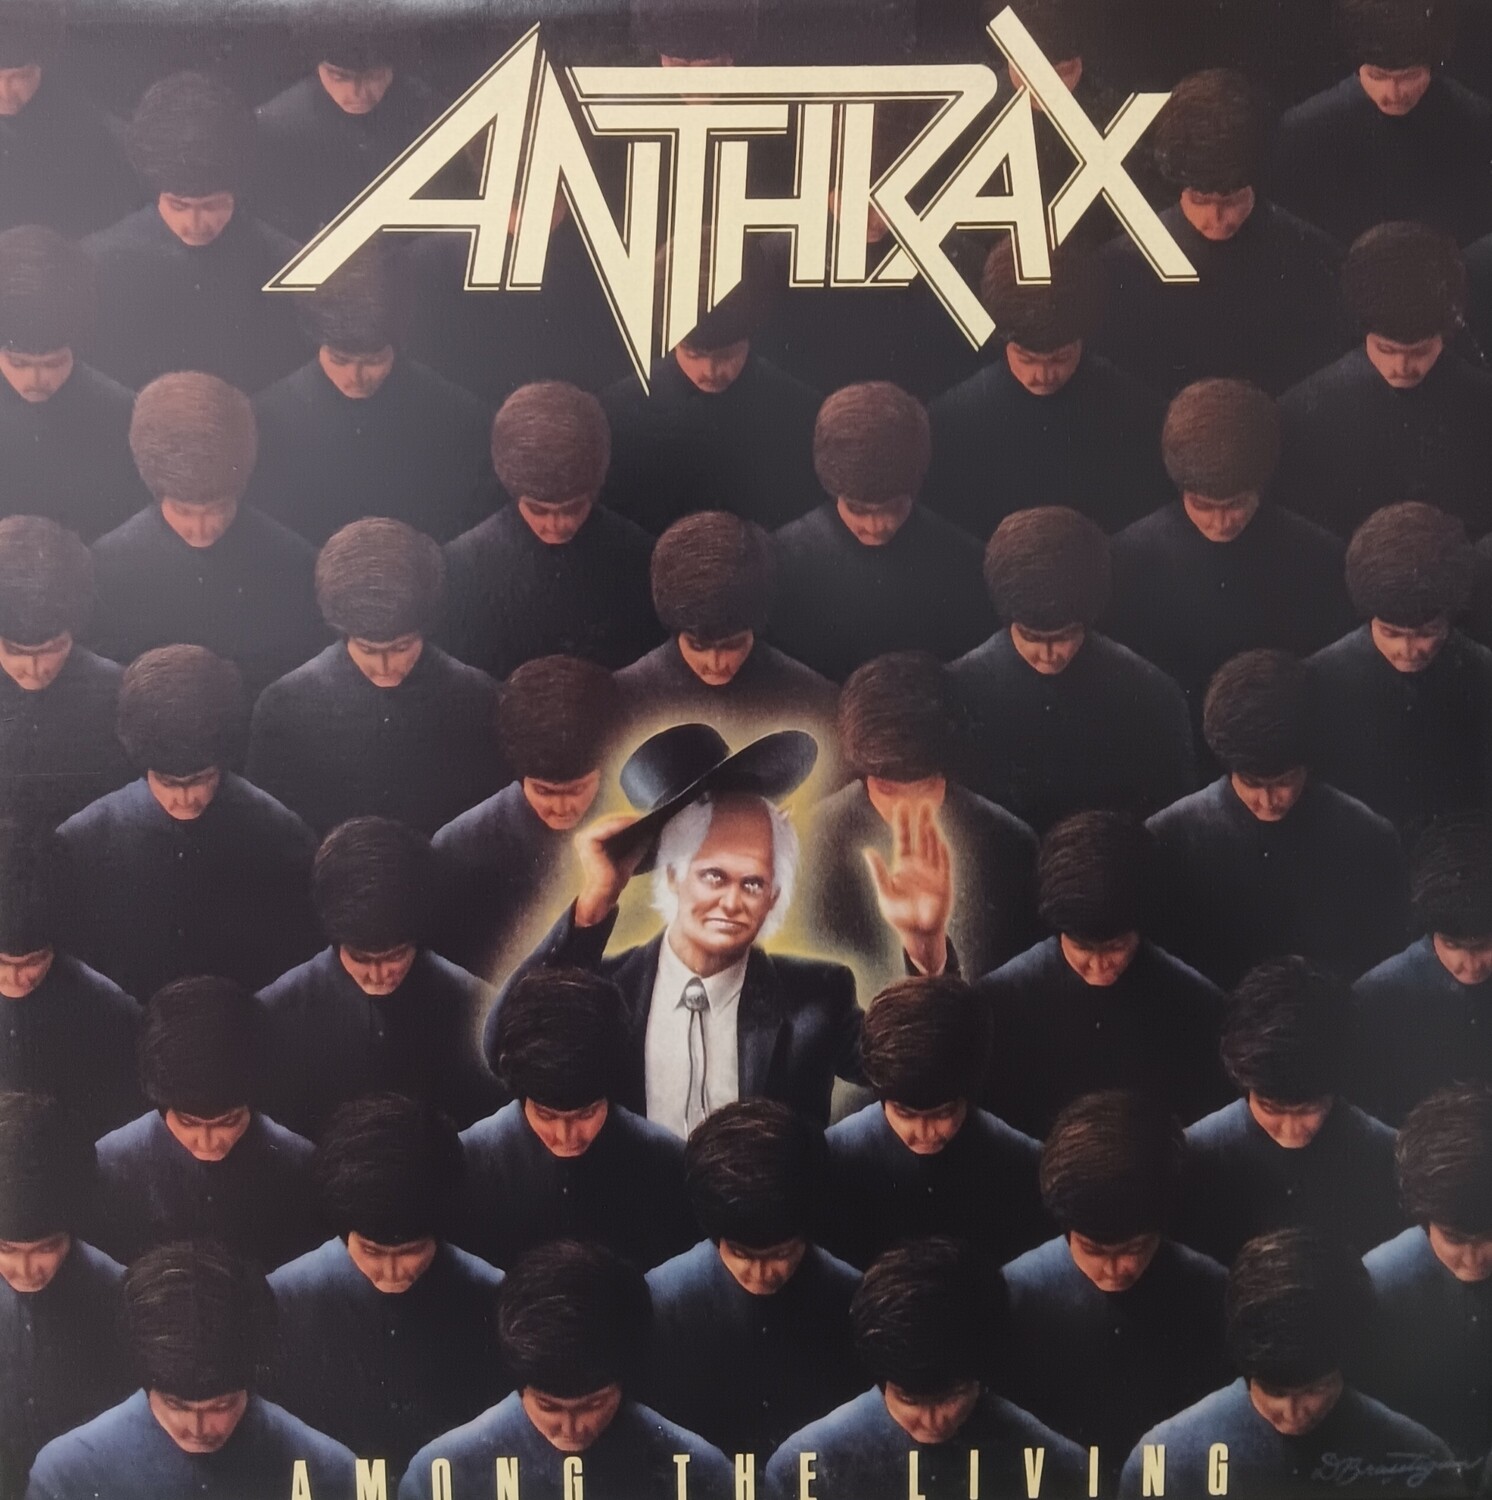 ANTHRAX - Among the living (2012)